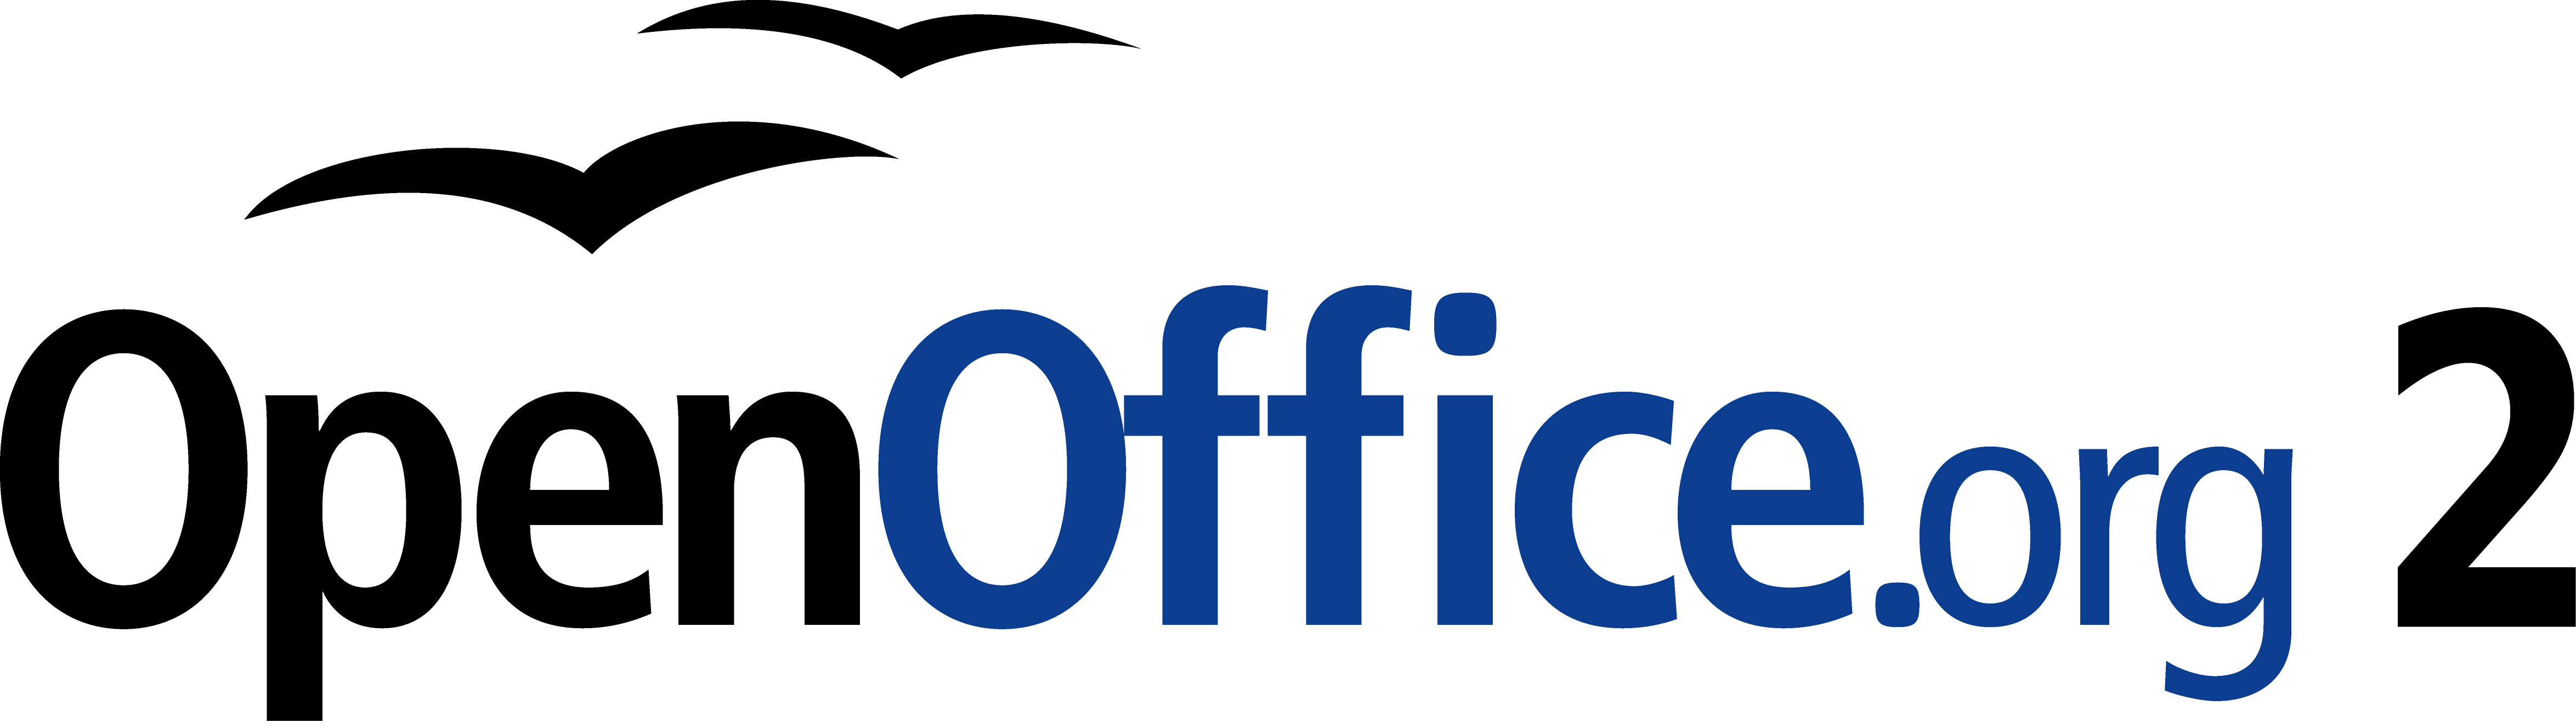 OpenOffice.org Bürosoftare